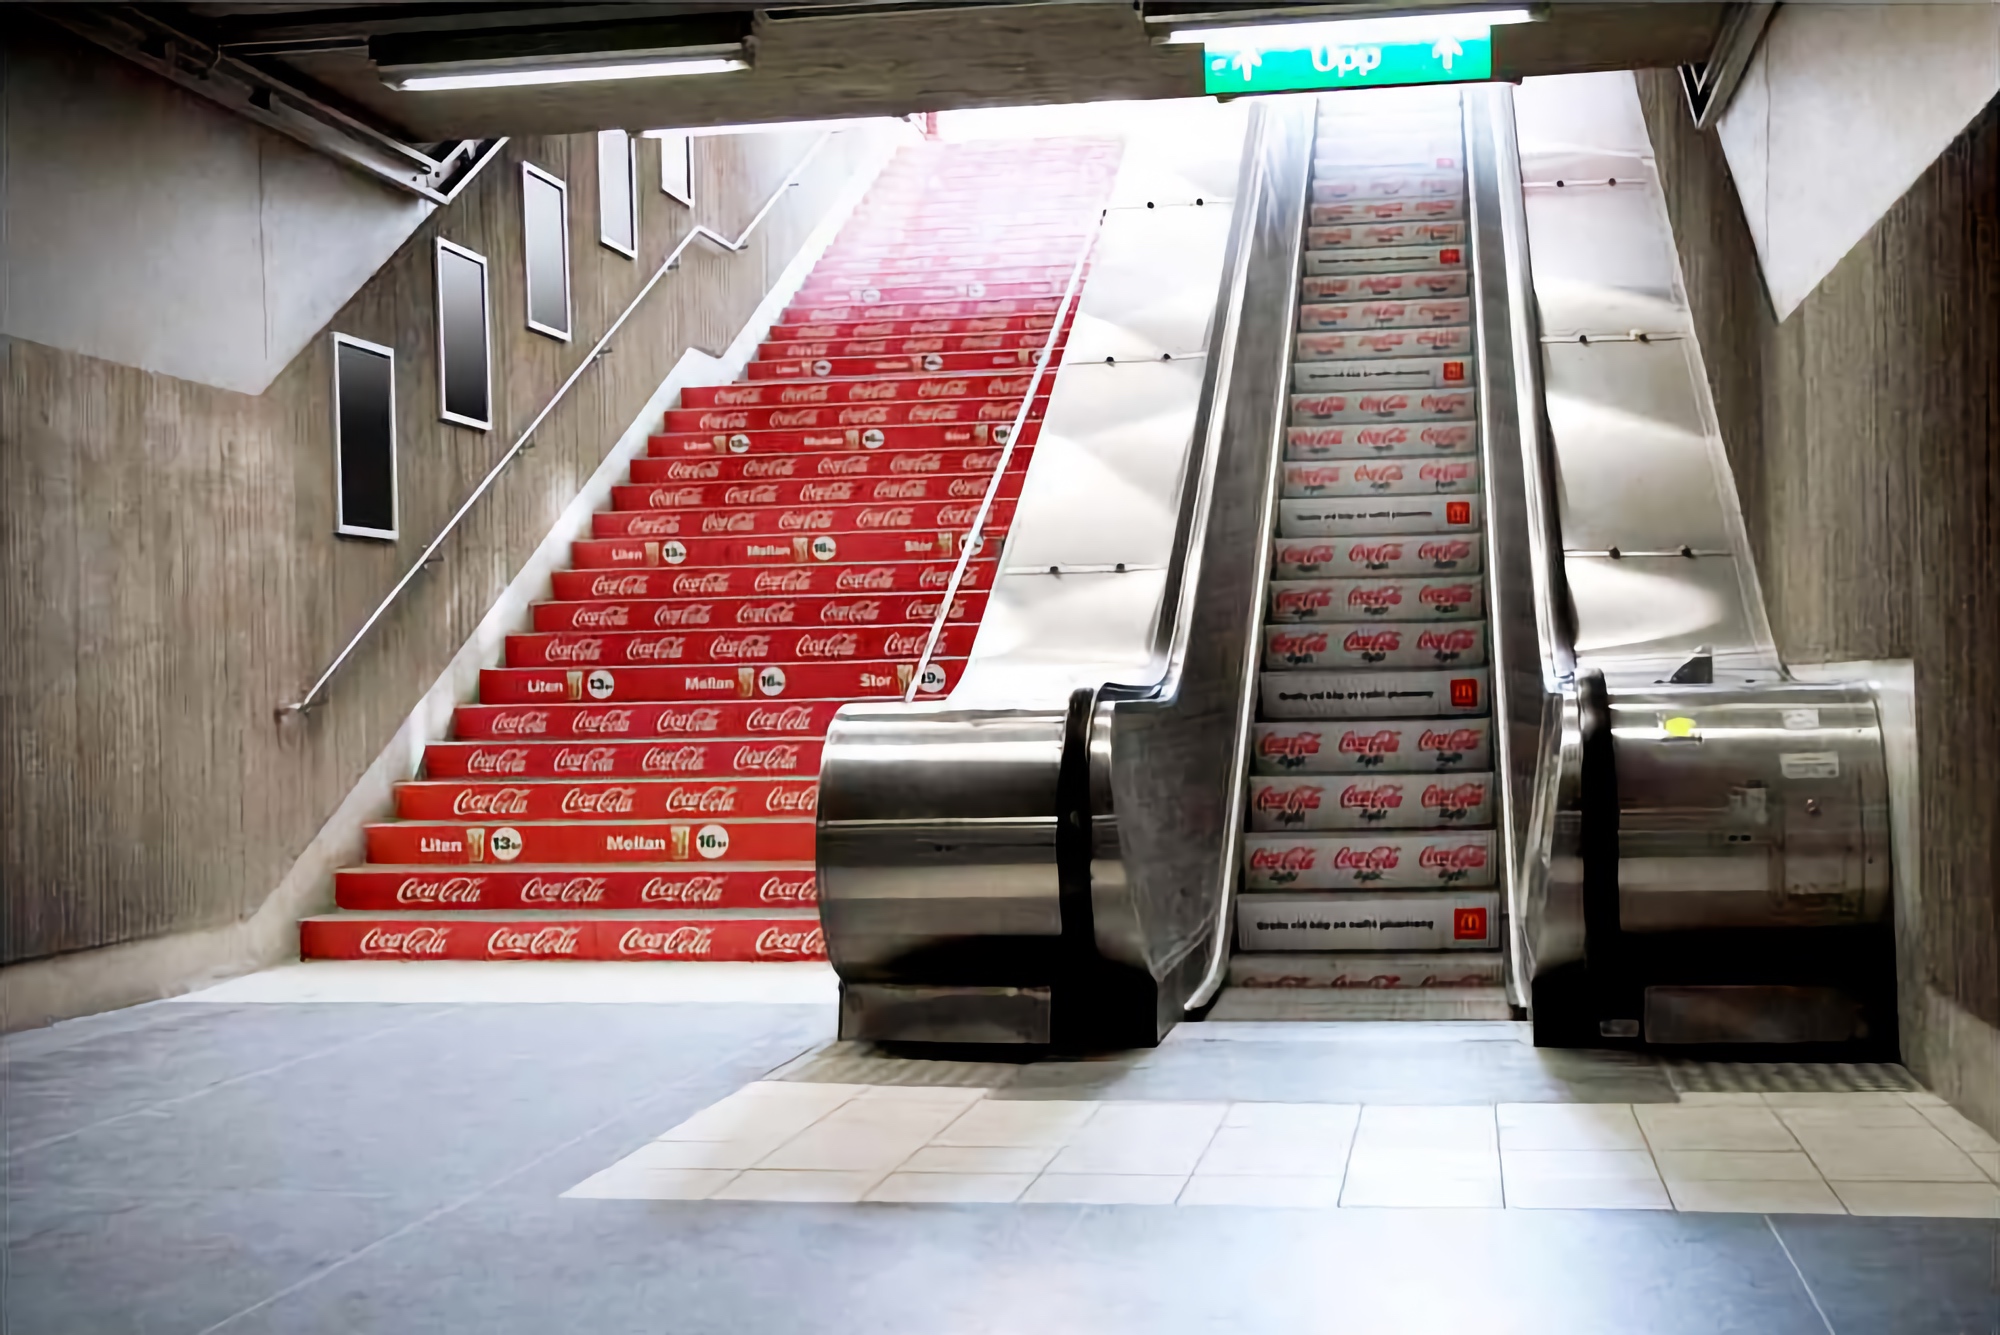 Coca-Cola Escalator Stairs